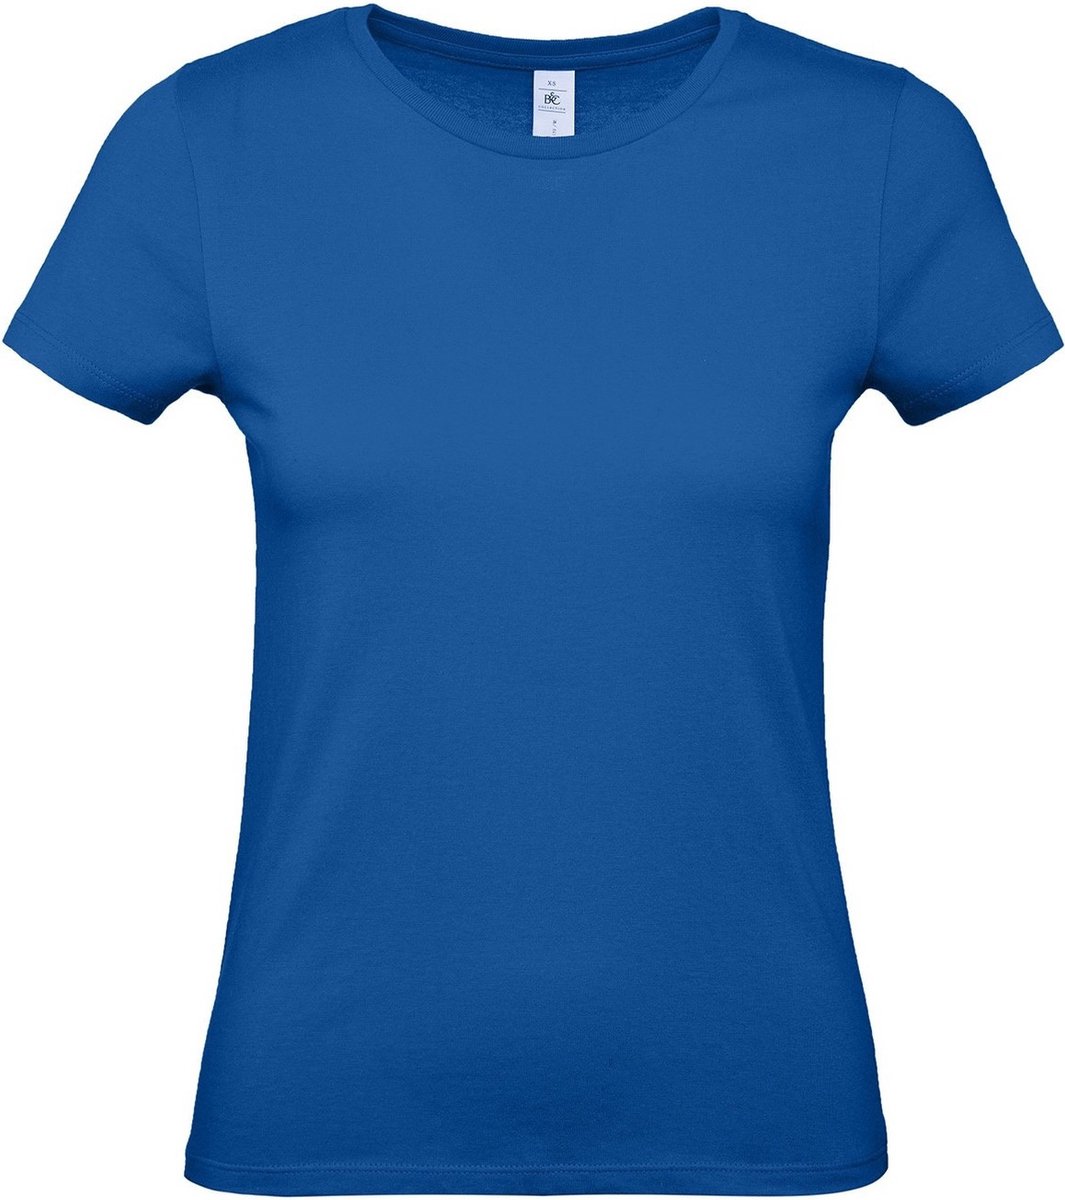 Blauw basic t-shirts met ronde hals voor dames - katoen - 145 grams - blauwe shirts / kleding XL (42)